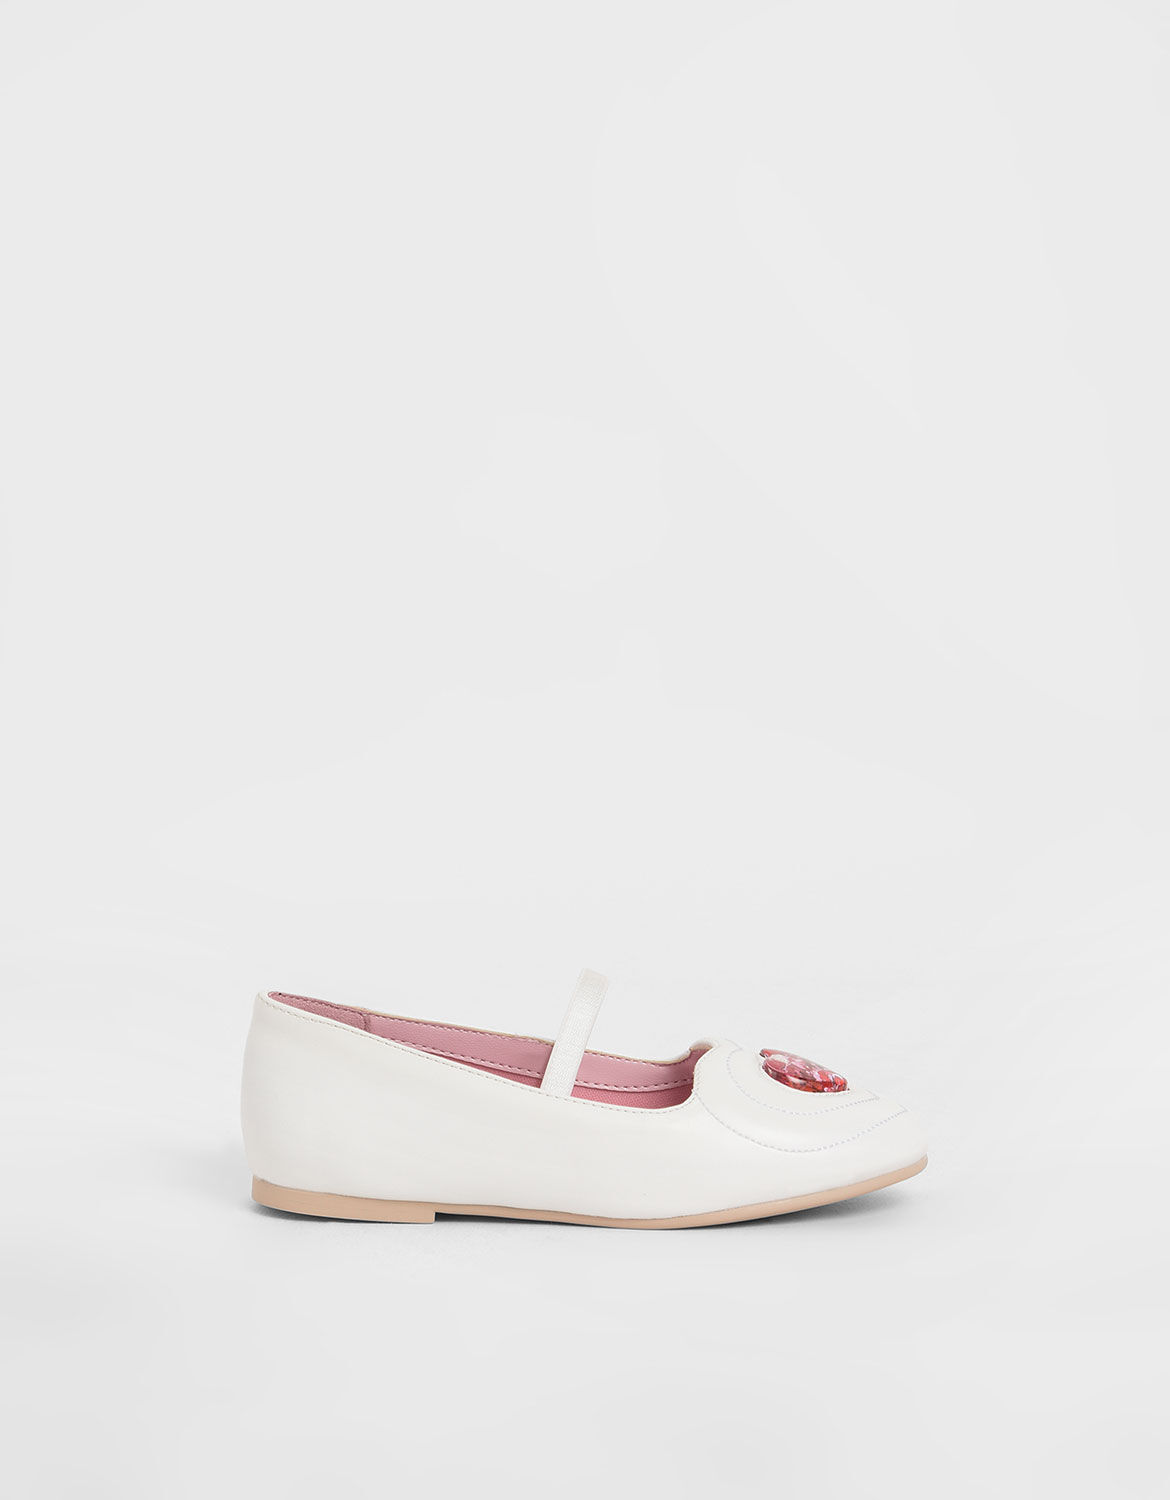 white flat ballet shoes